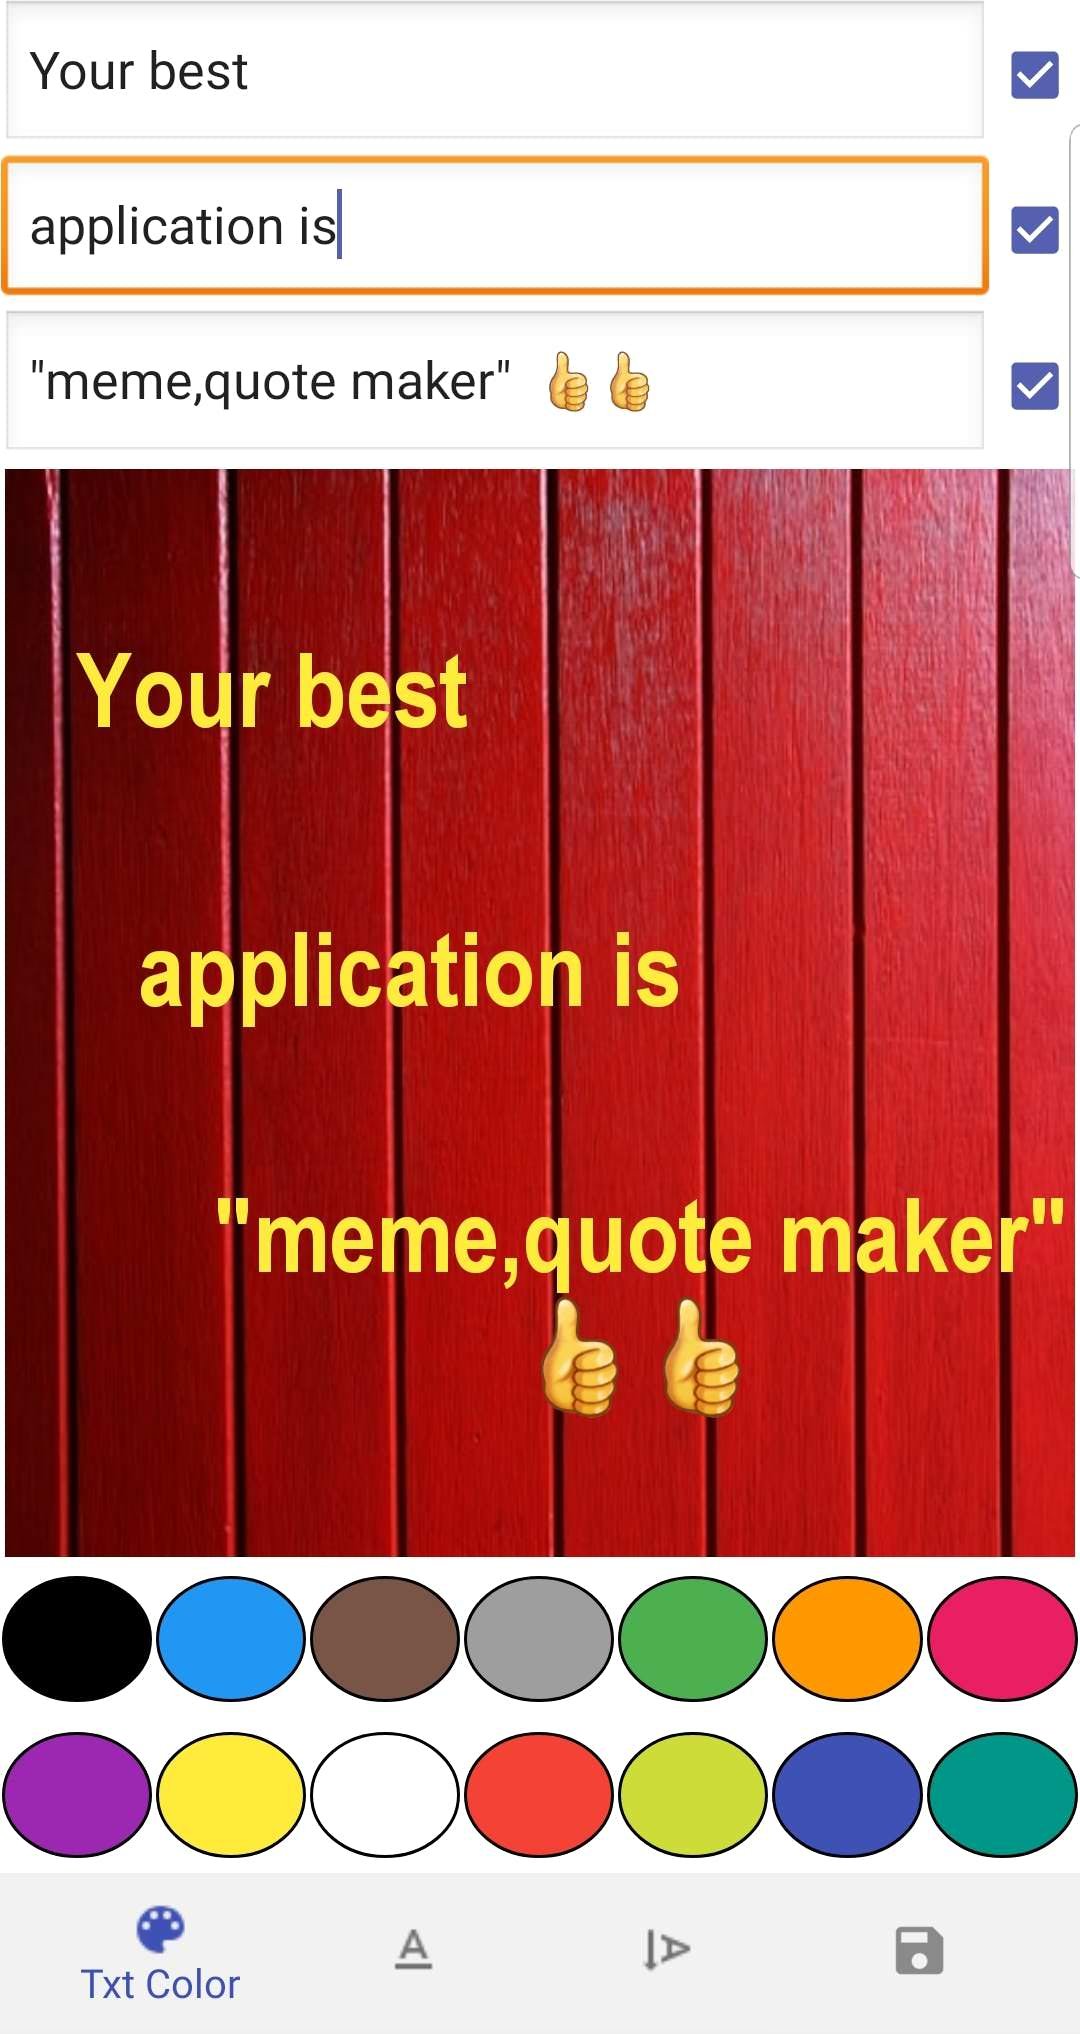 Memequote Maker Steemhunt